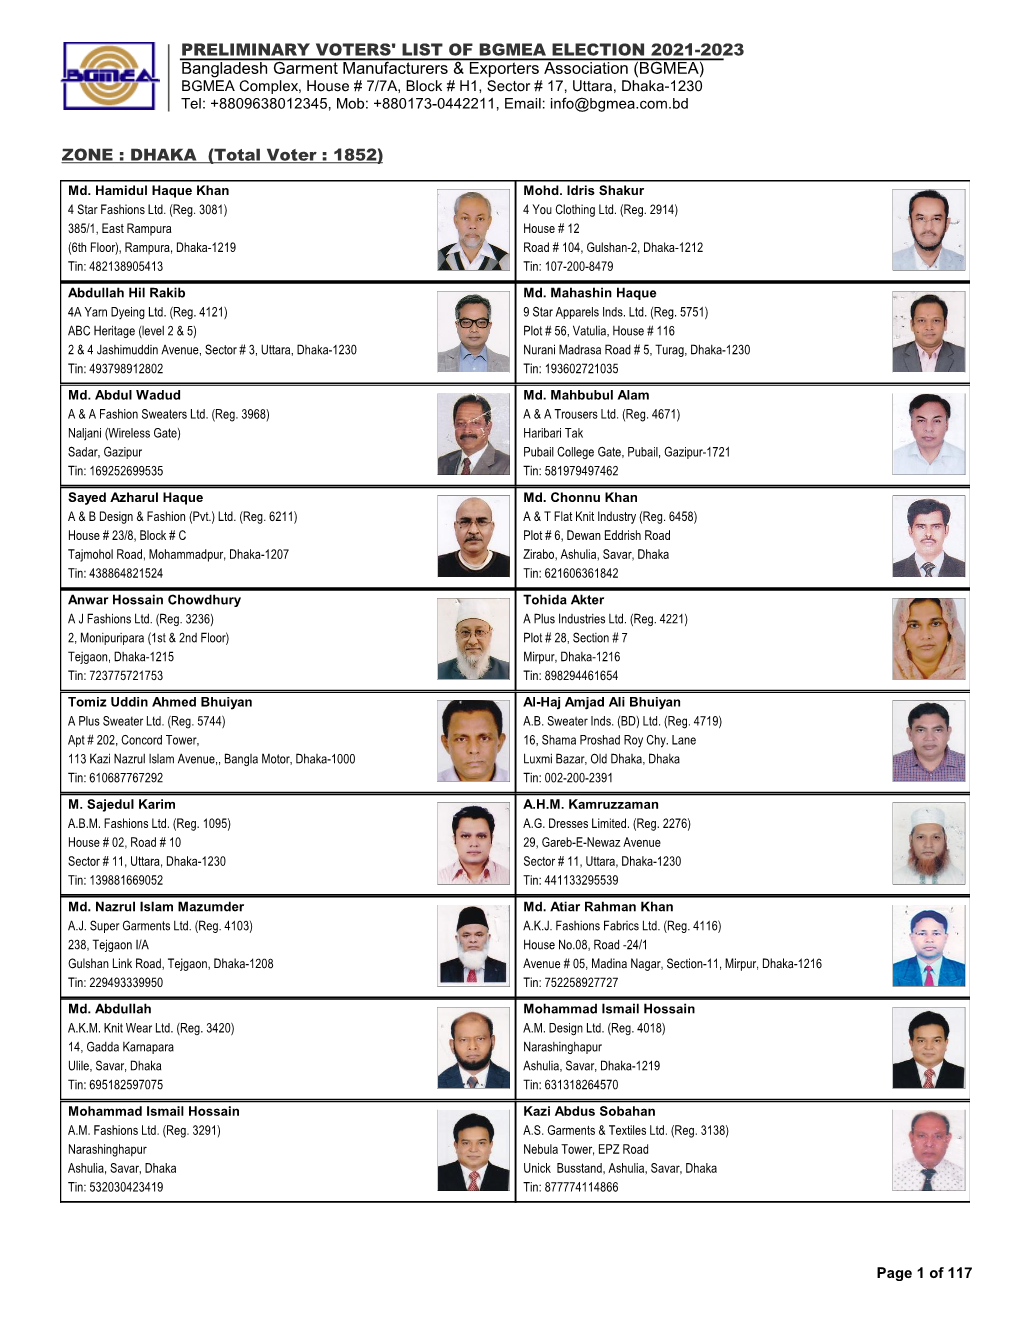 Preliminary Voters' List of Bgmea Election 2021-2023